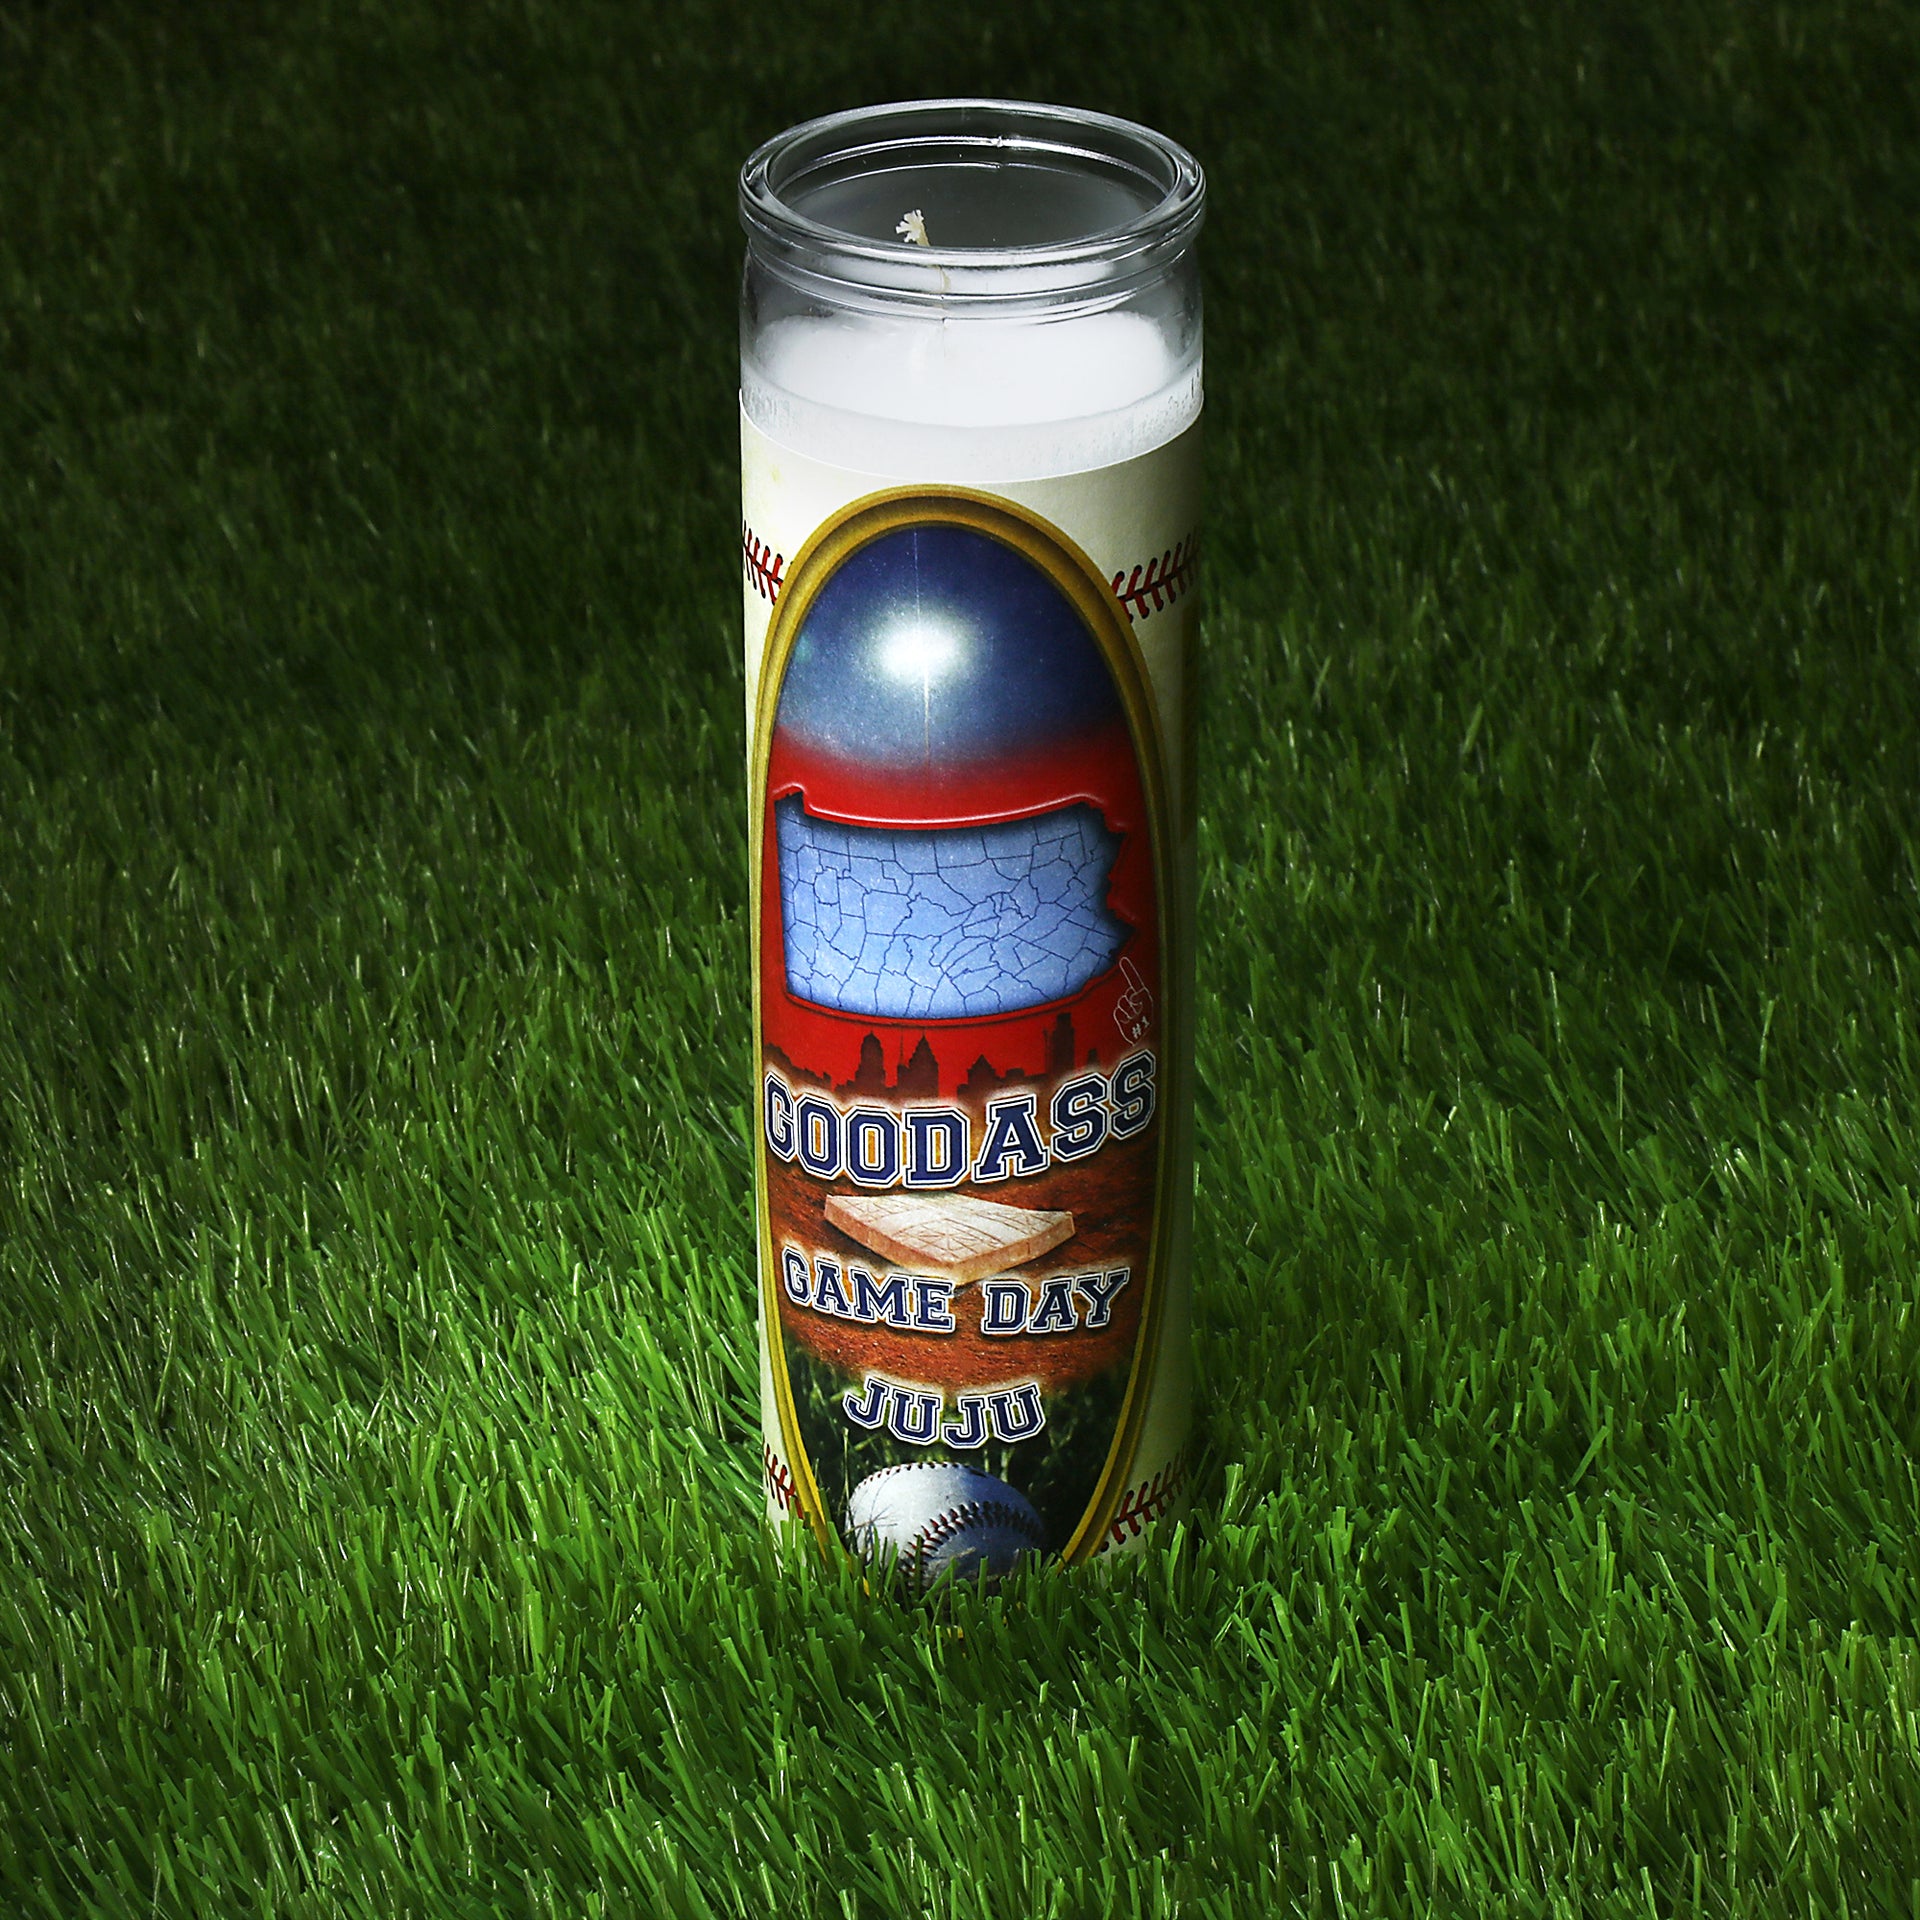 The Philadelphia Baseball Game Day Juju Unscented Prayer Candle